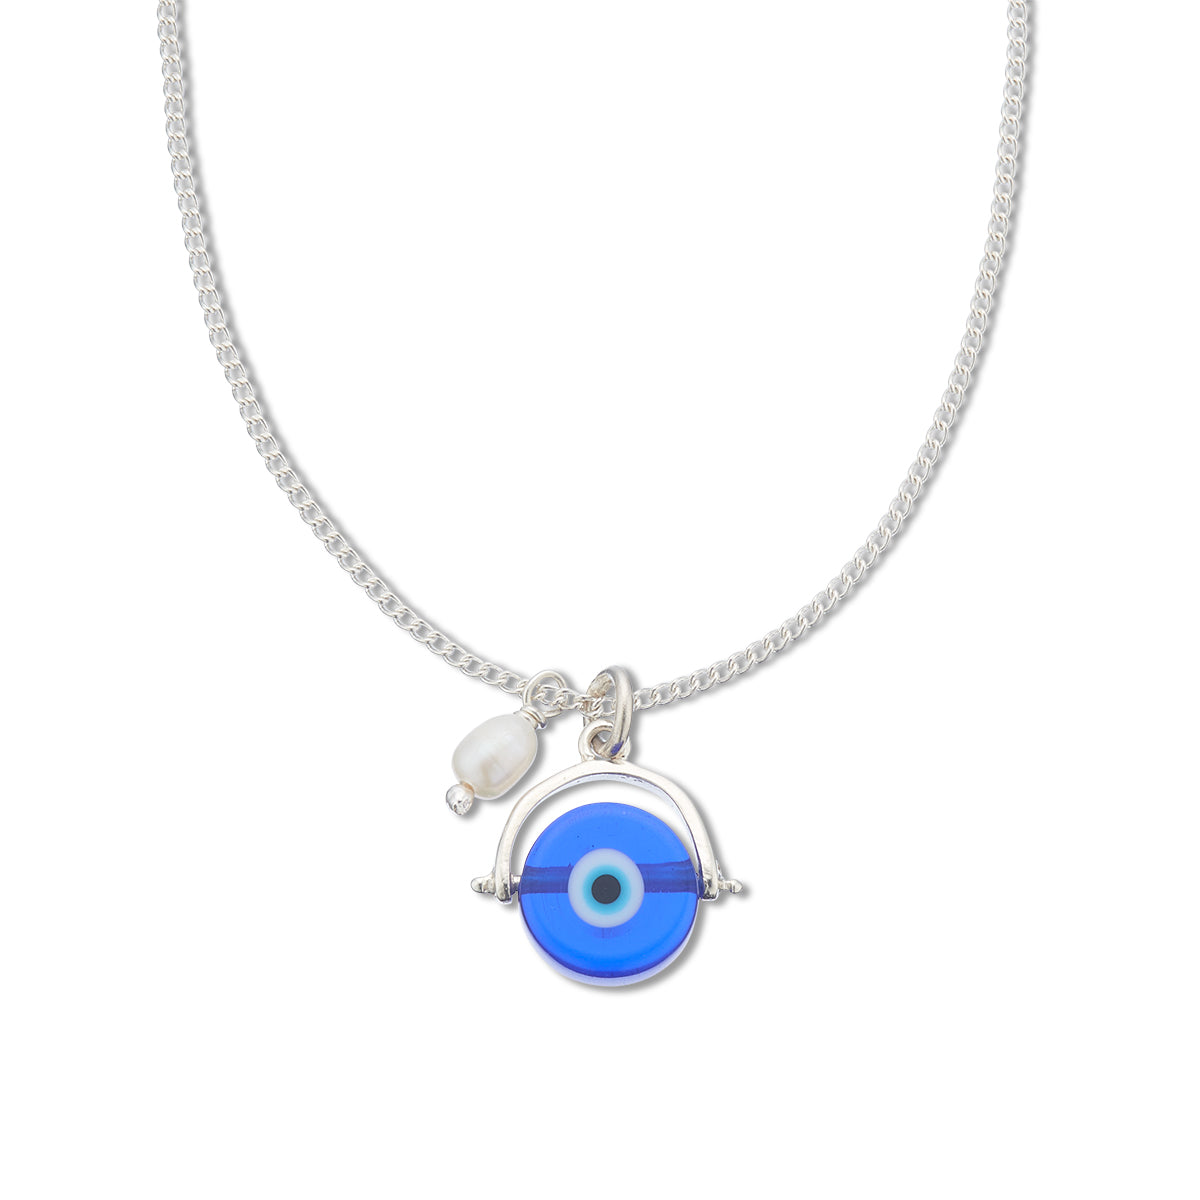 Mati evil eye charm & pearl necklace (adjustable)